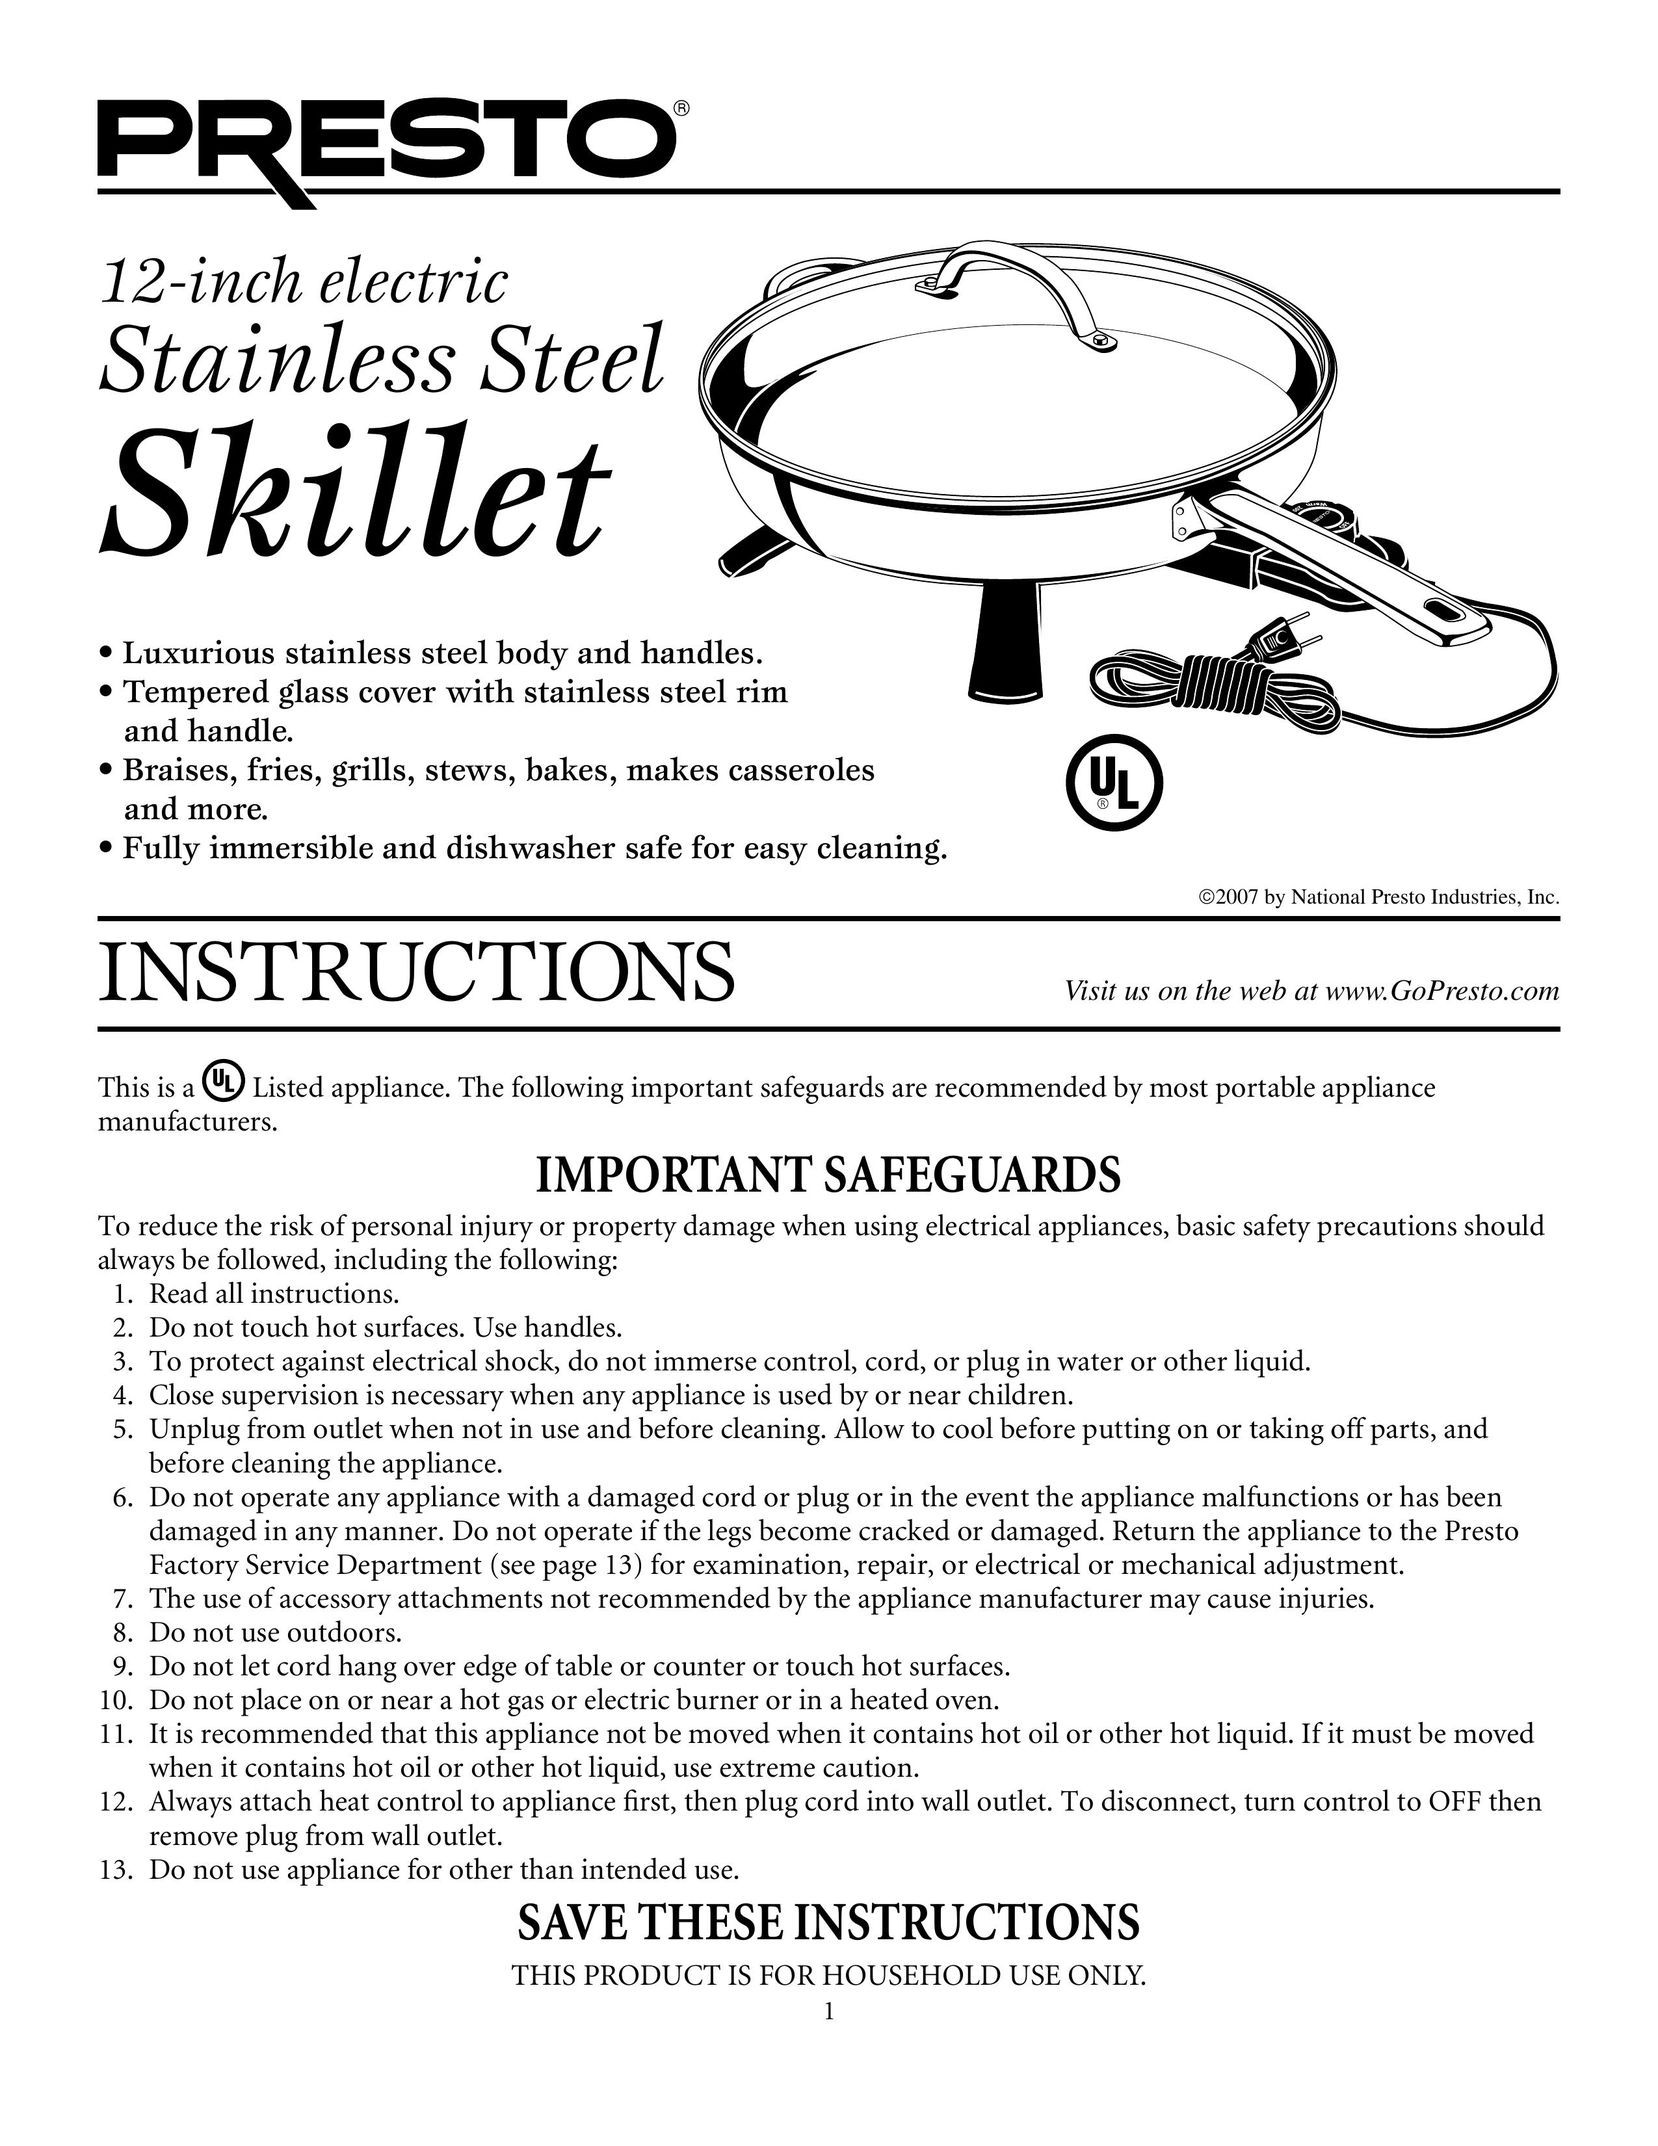 Presto electric Stainless Steel Skillet Fryer User Manual